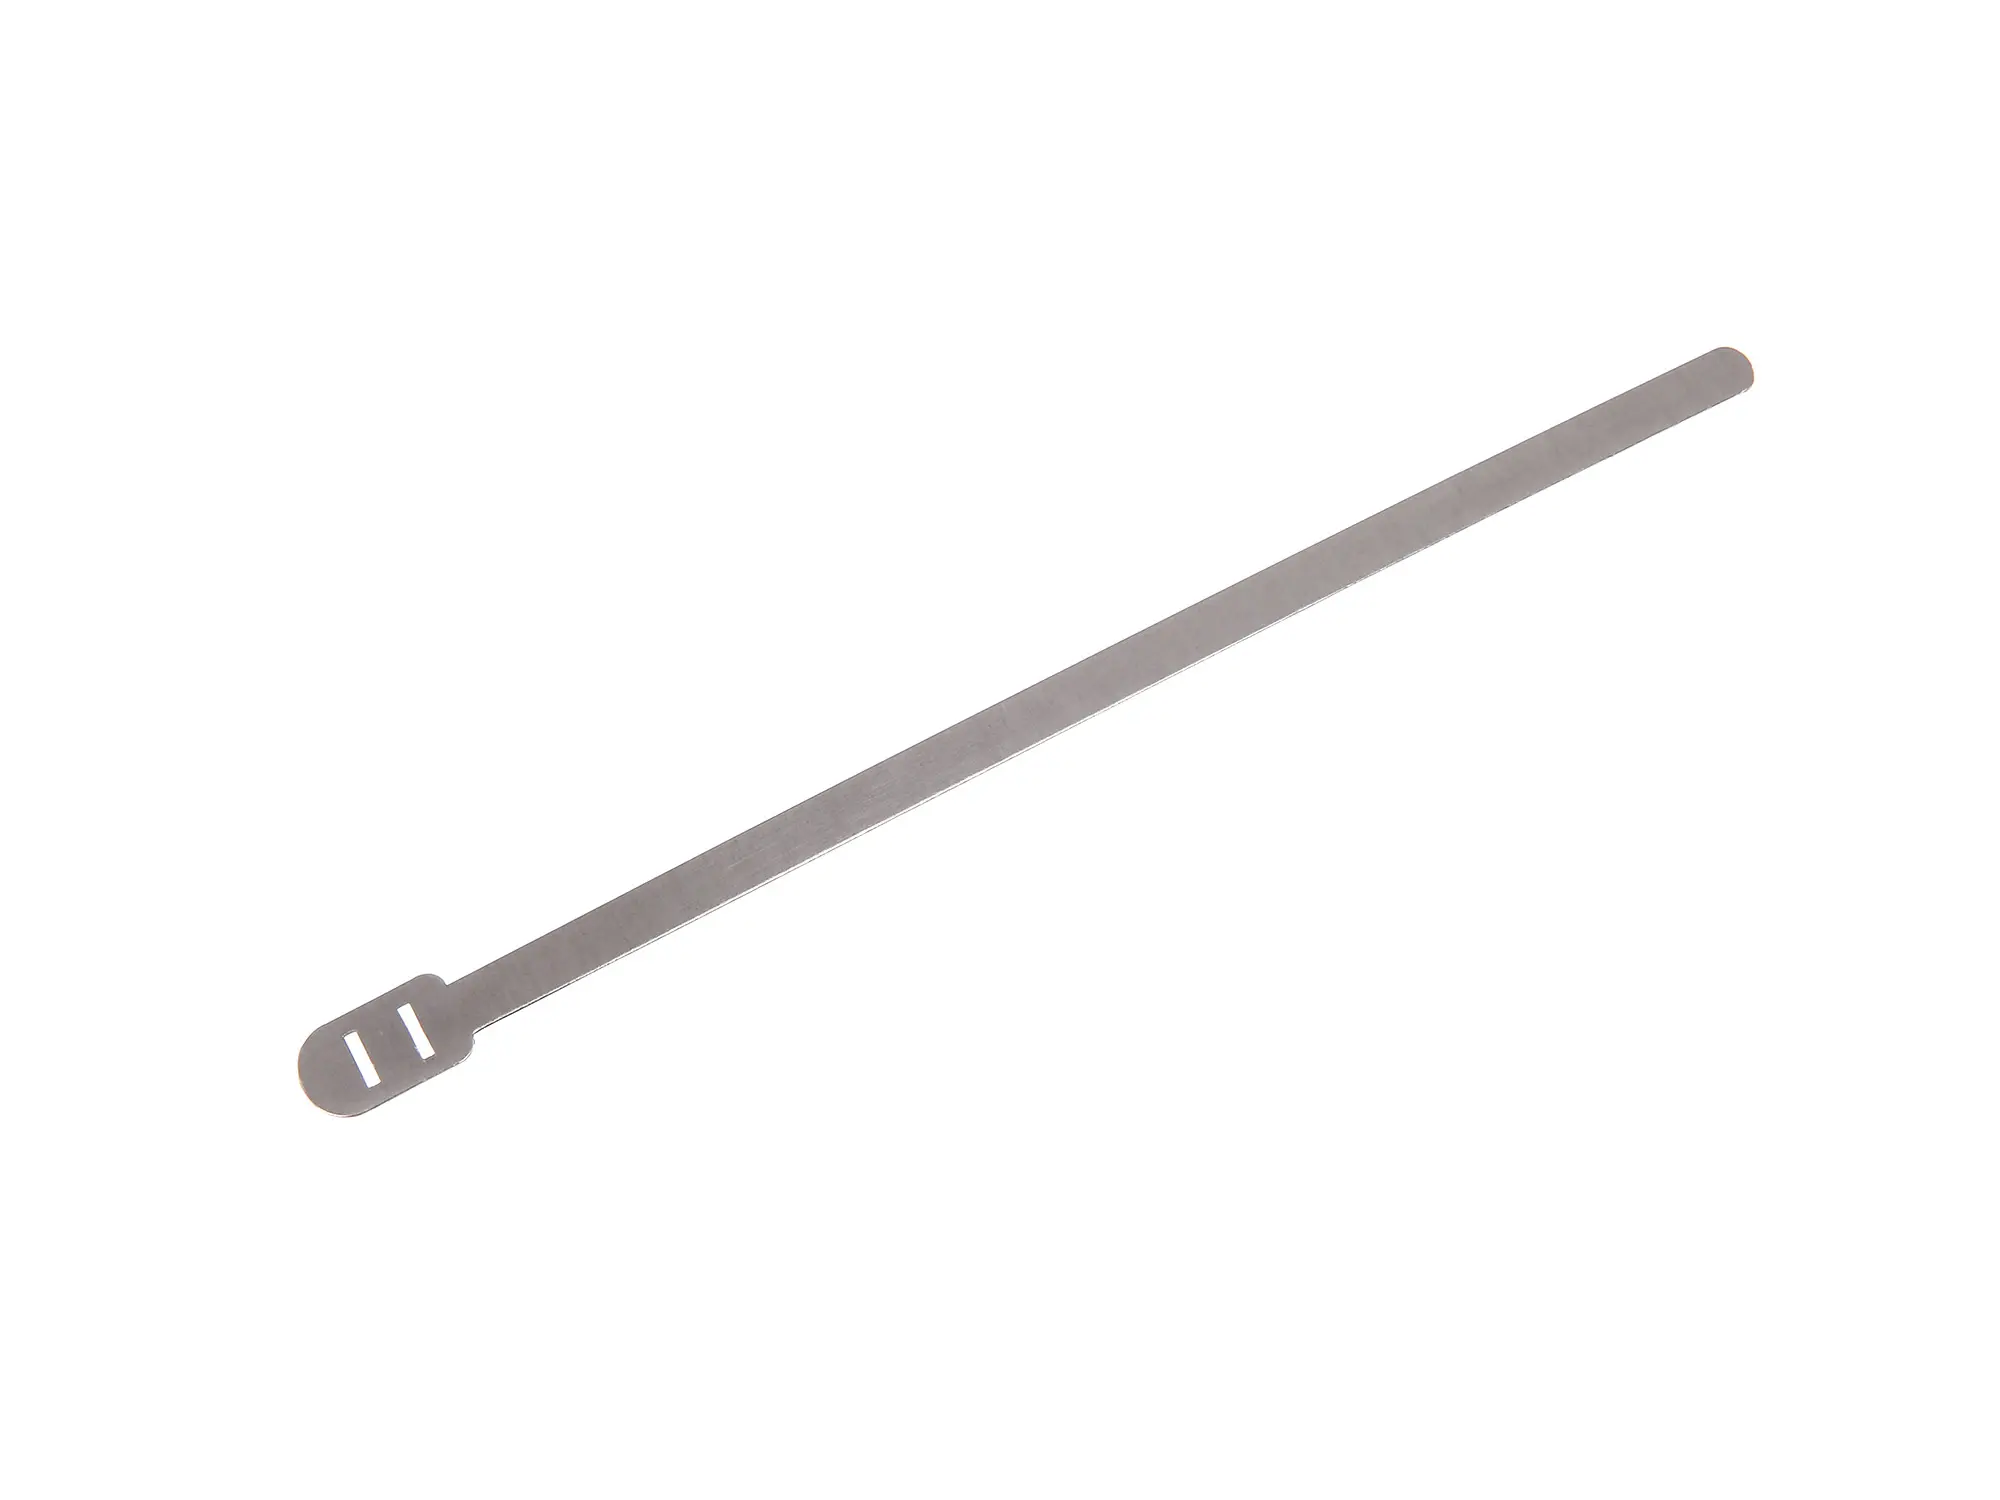 Kabelbinder Aluminium 180mm lang, 6mm breit, 0,5mm dick, Art.-Nr.: 10057798 - Bild 1